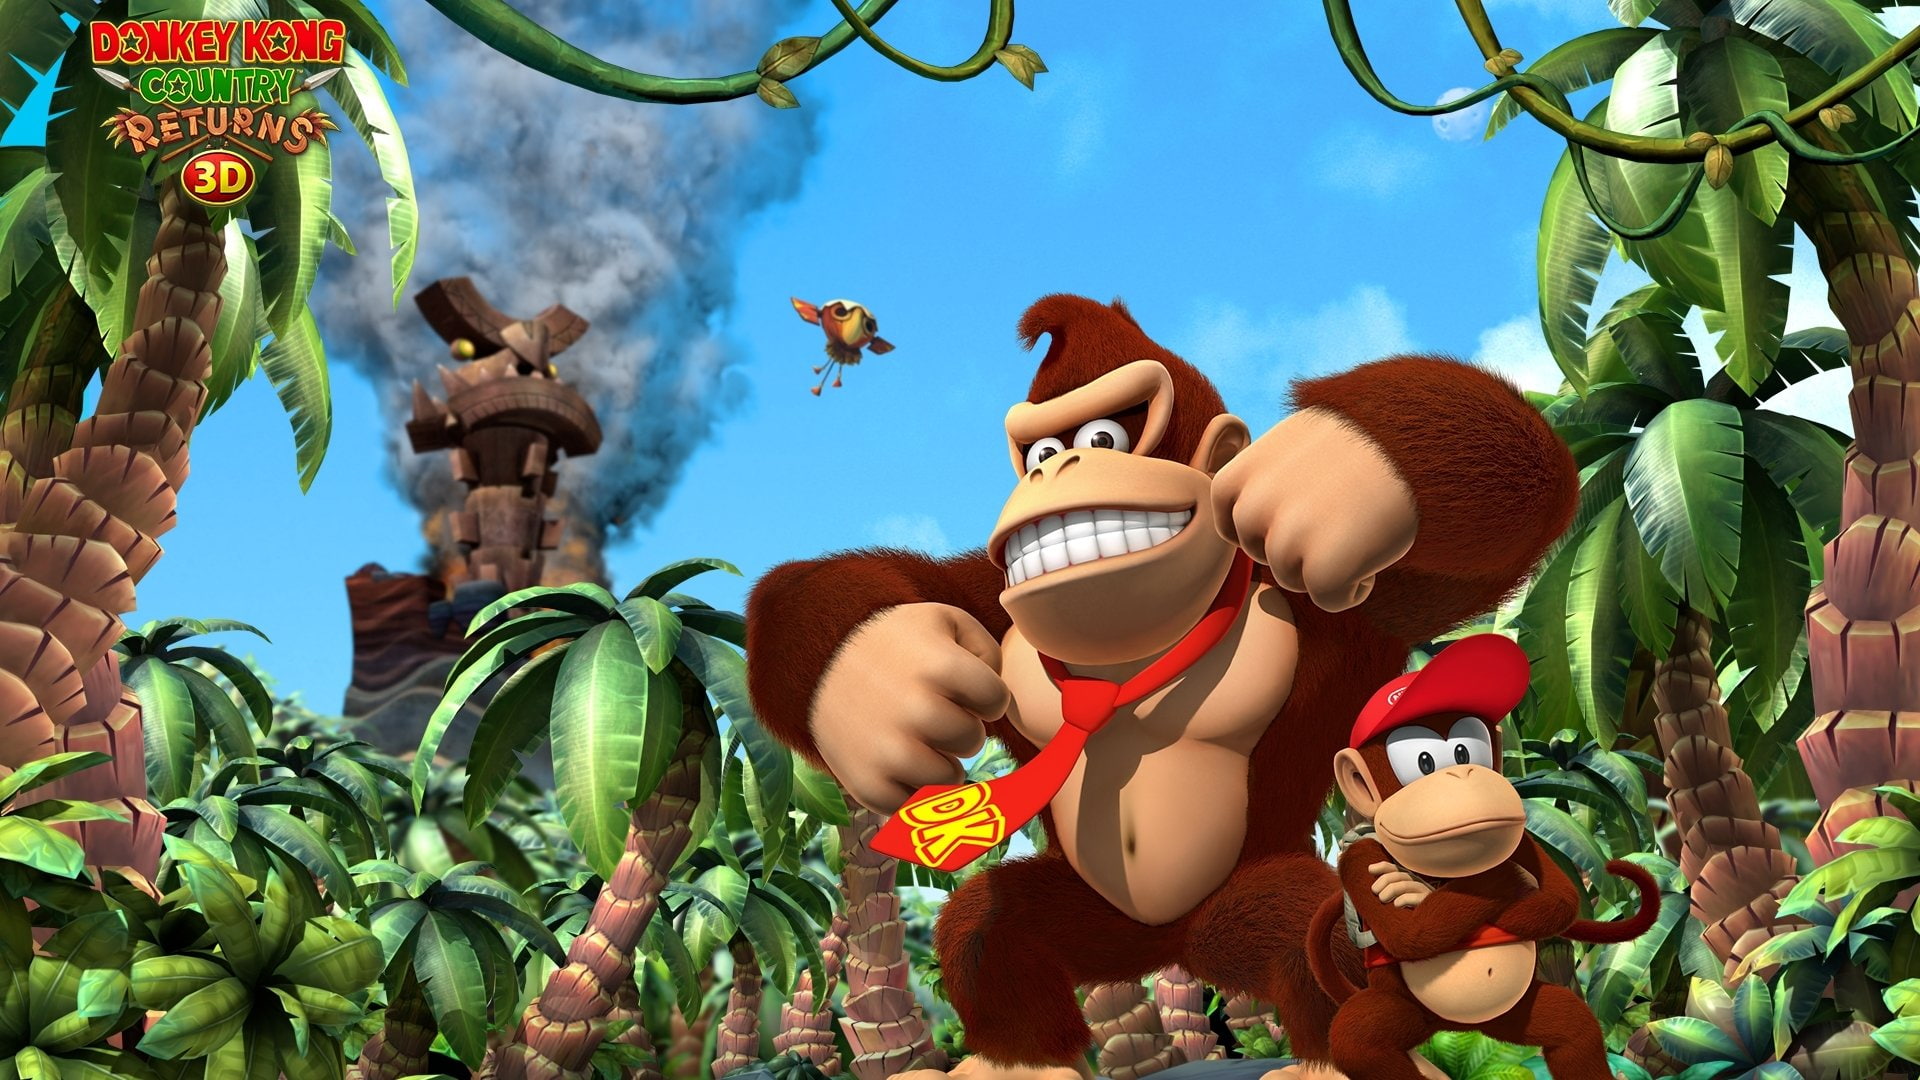 Donkey Kong, Donkey Kong Country Returns 3D